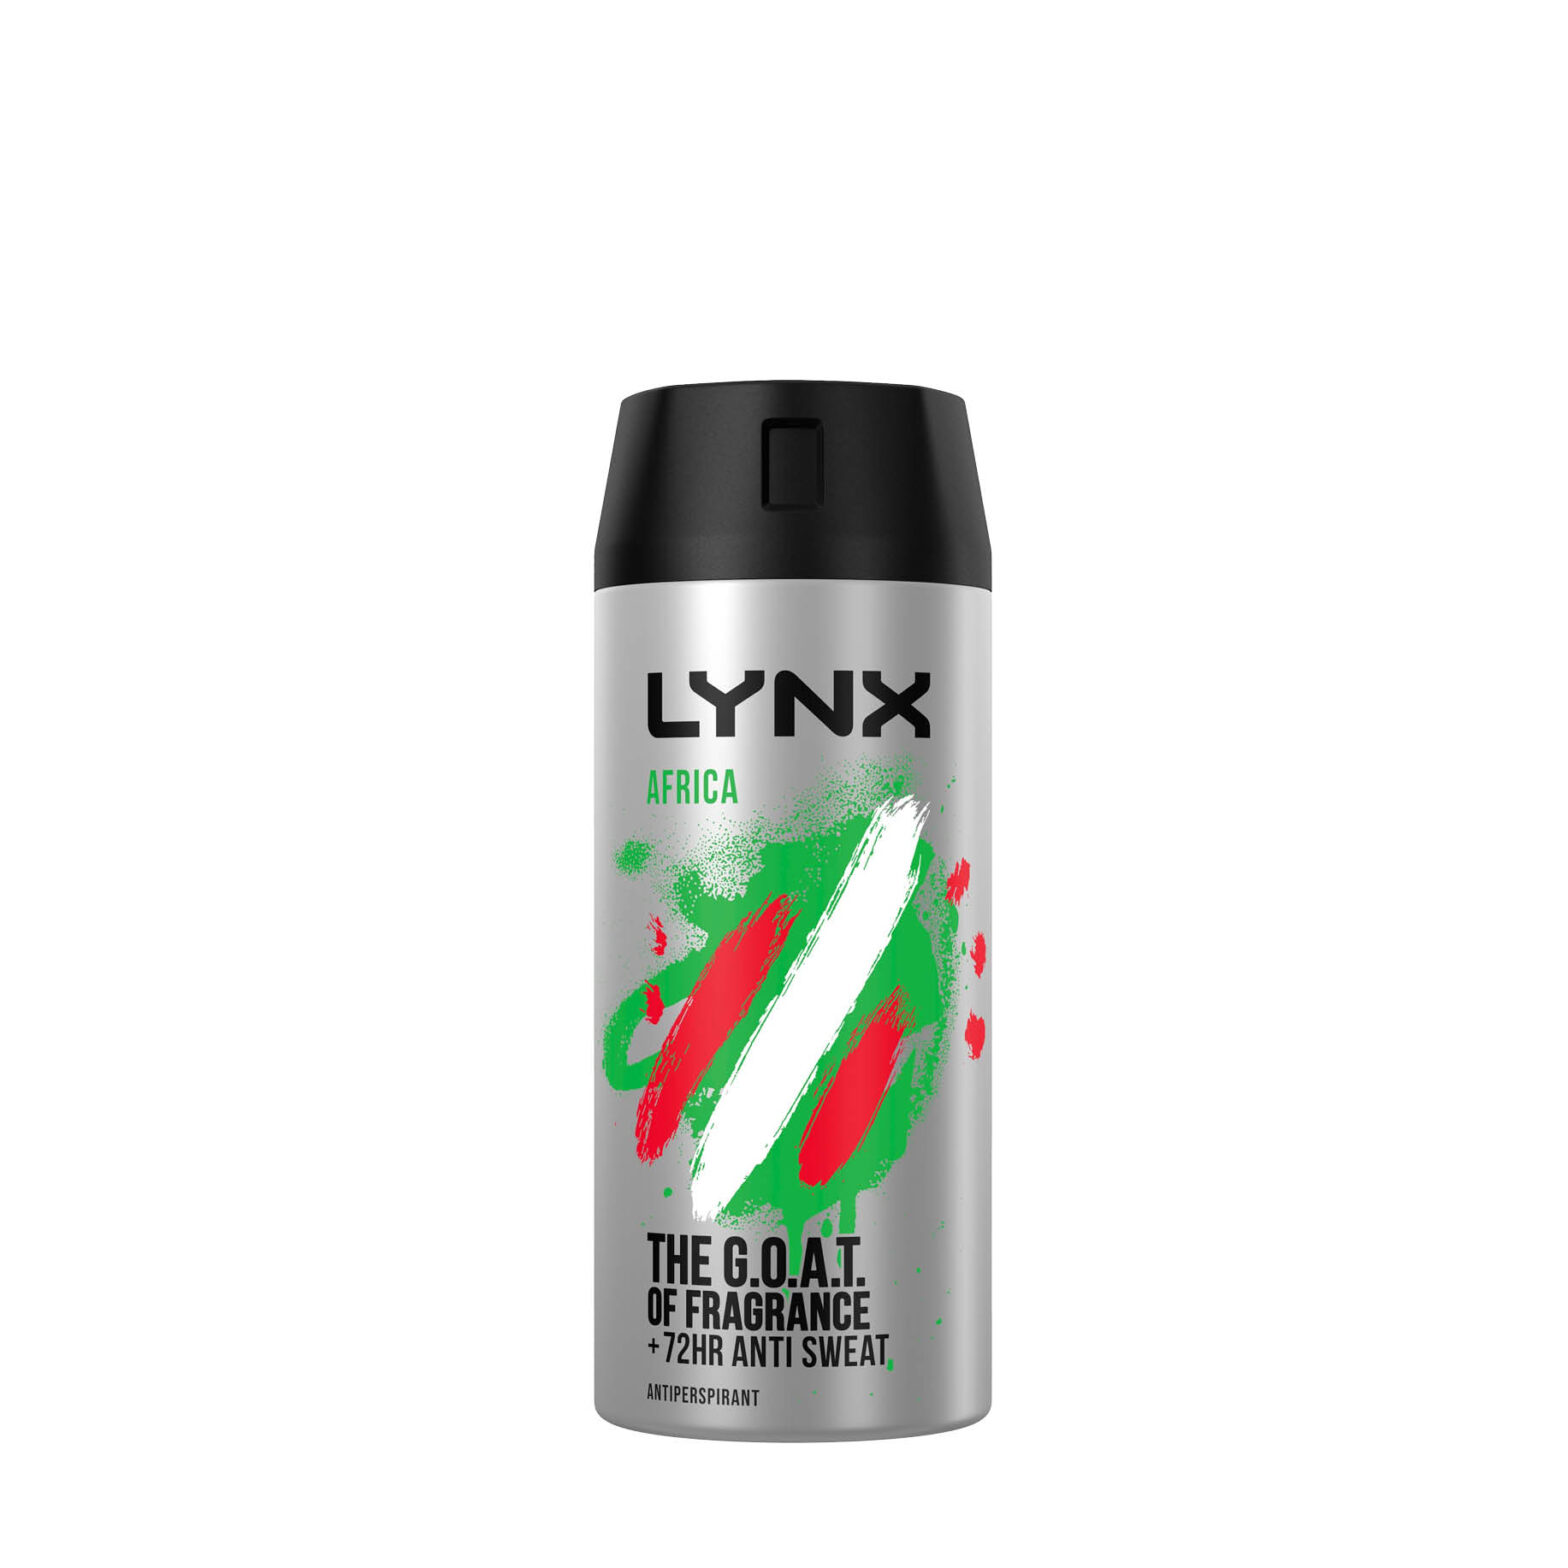 Lynx Africa 25 Years Anti-Perspirant Deodorant